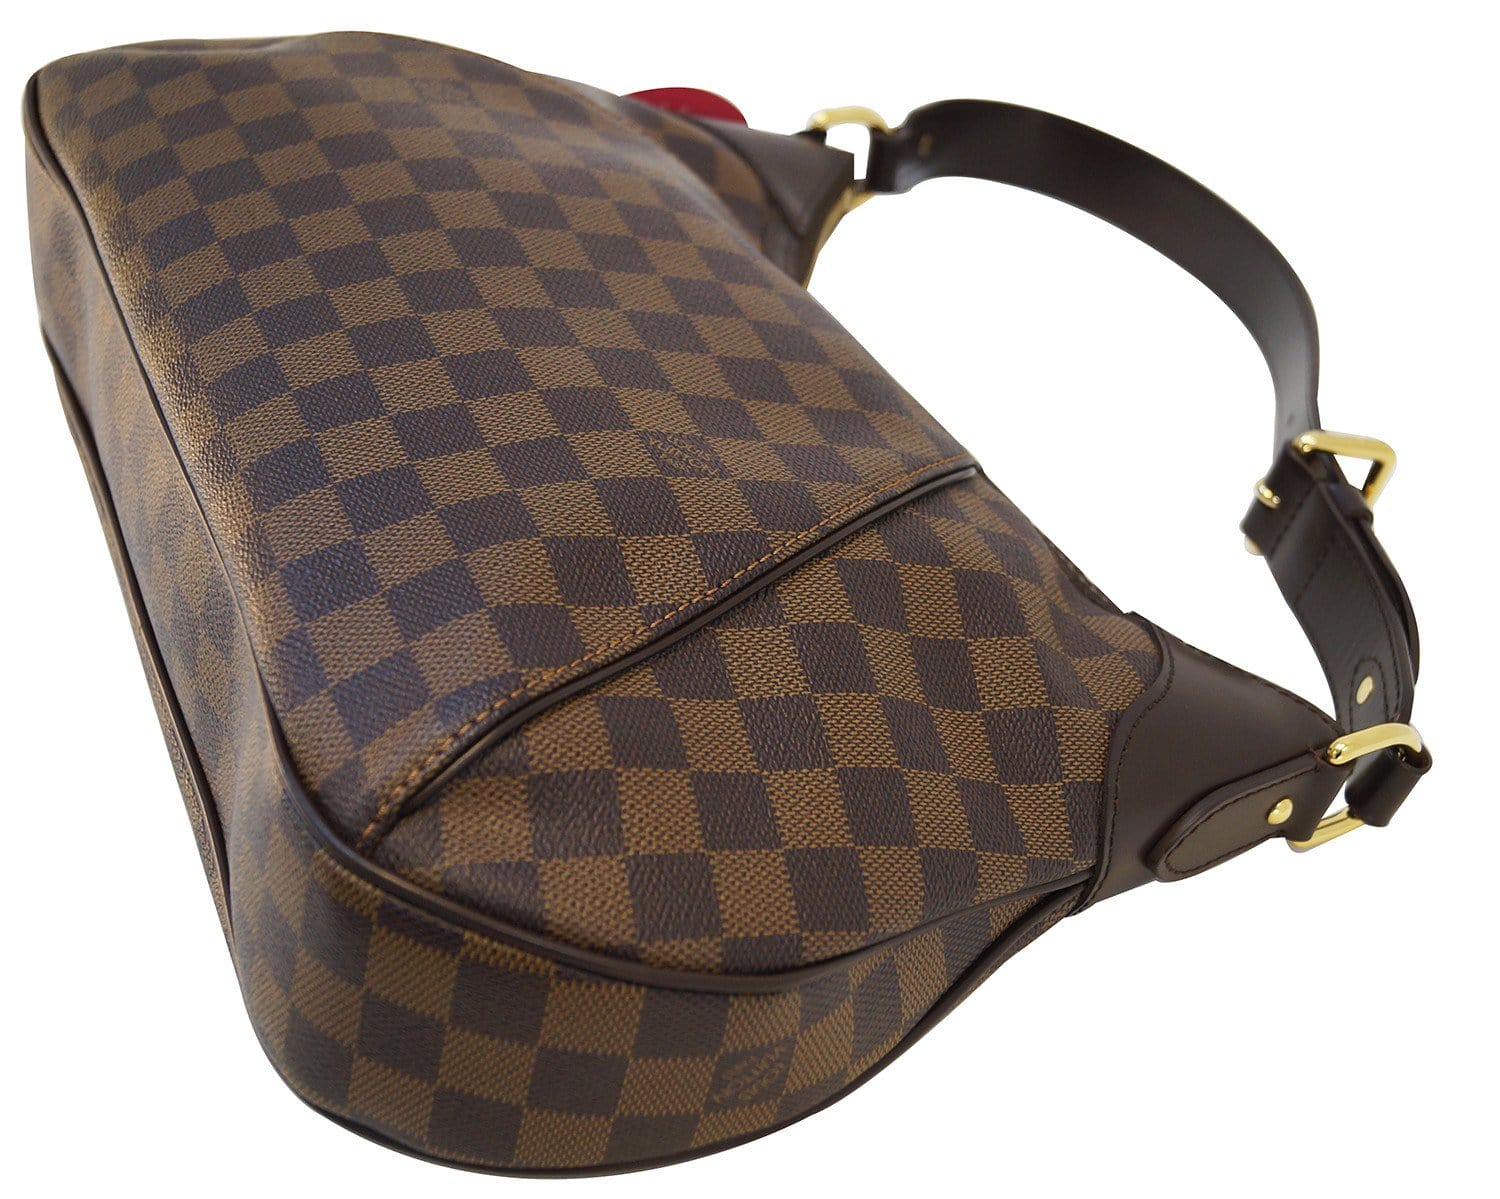 Louis Vuitton Uzes Damier Ebene Shoulder Bag 001-062-00047, Lumina Gem